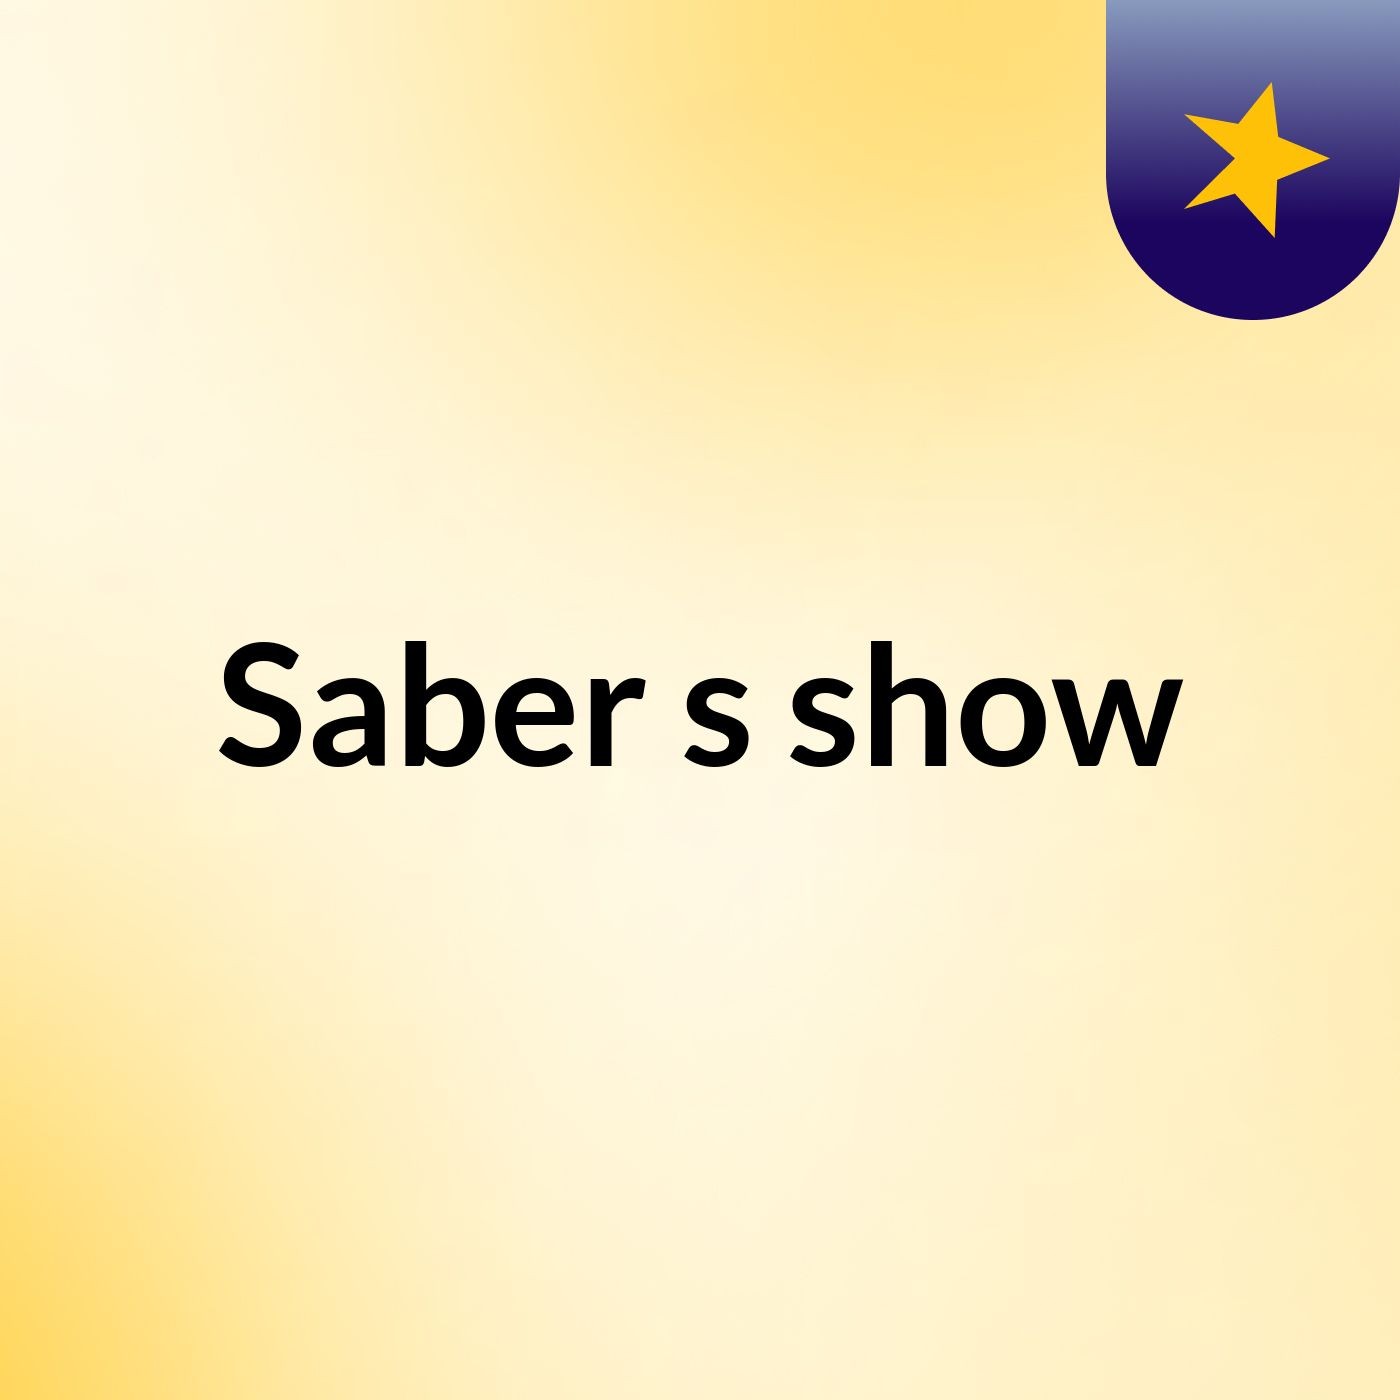 Saber's show